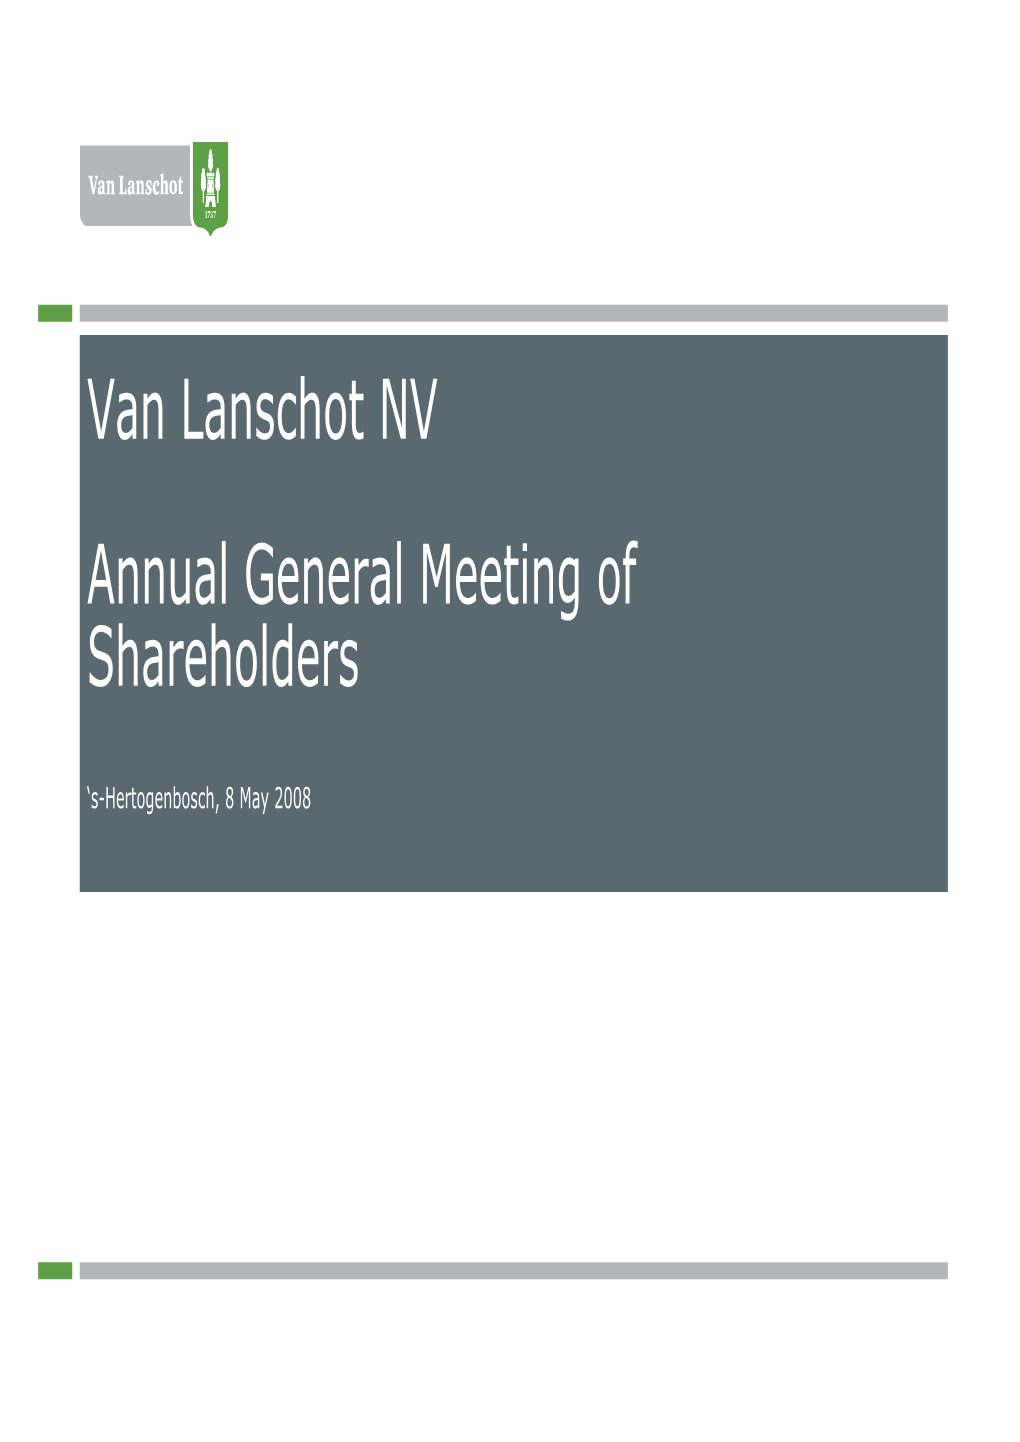 Van Lanschot NV Annual General Meeting Of